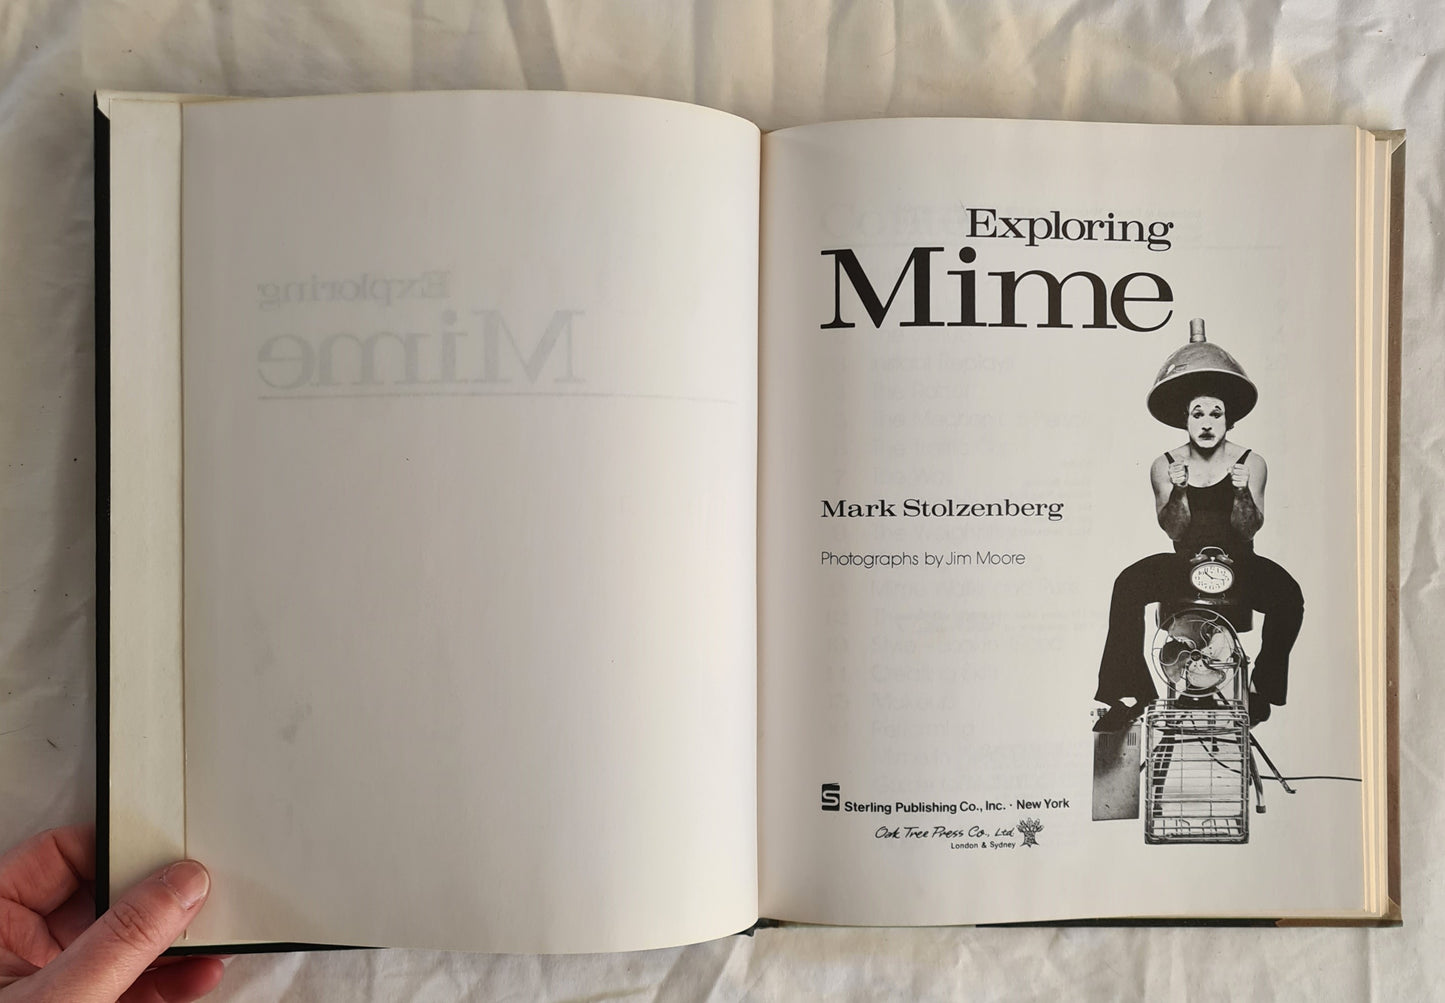 Exploring Mime by Mark Stolzenberg